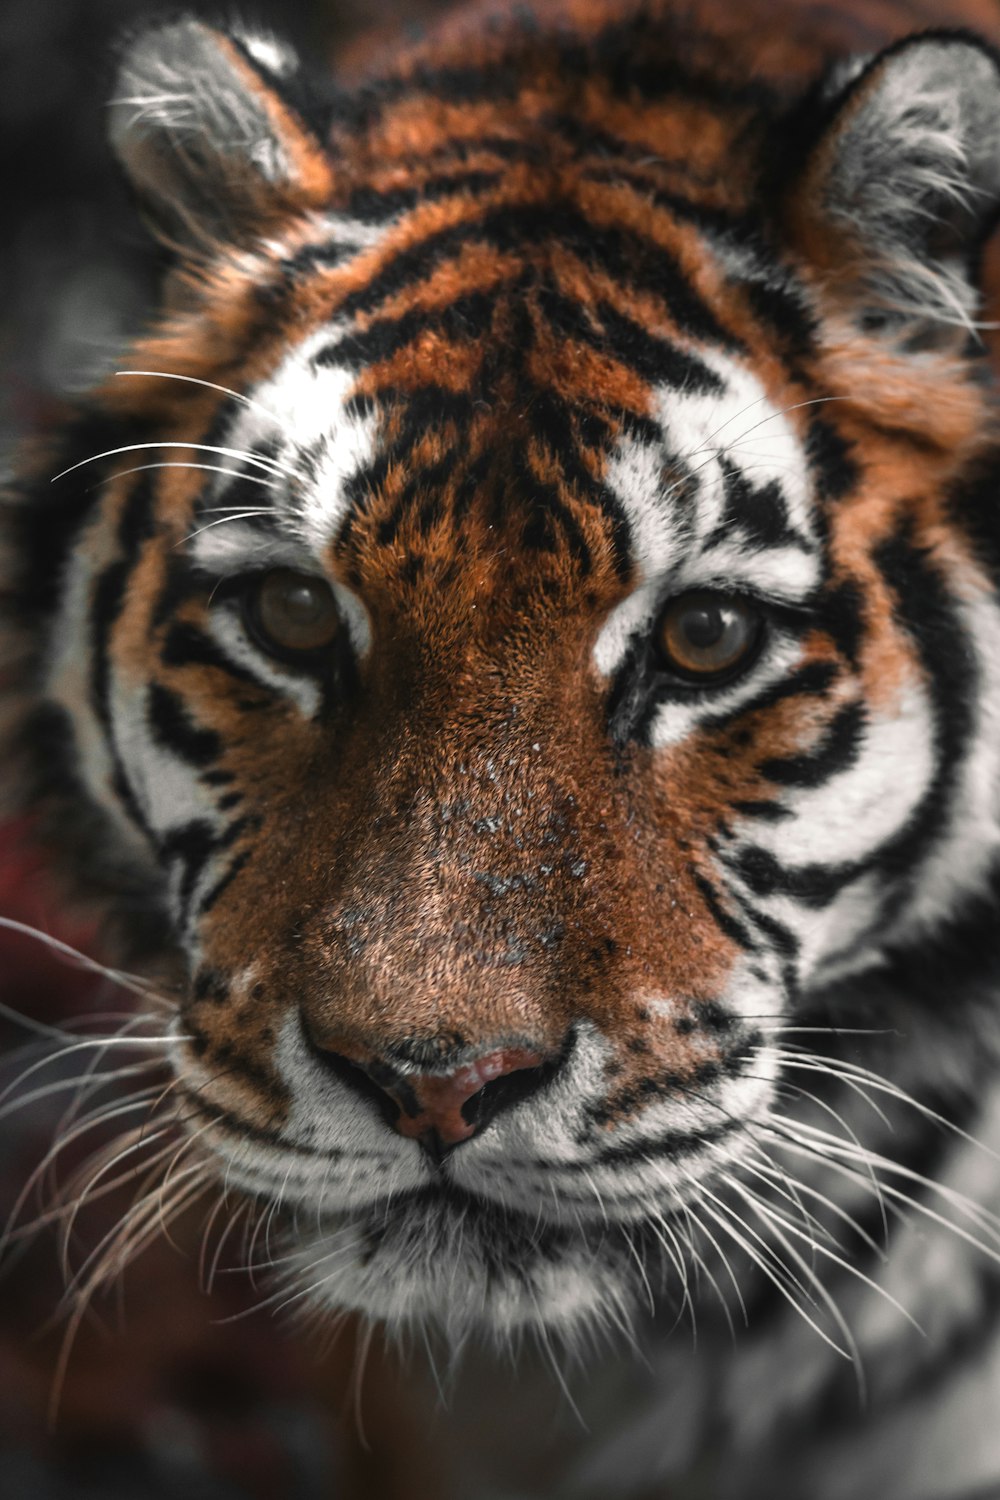 a close up of a tiger looking at the camera